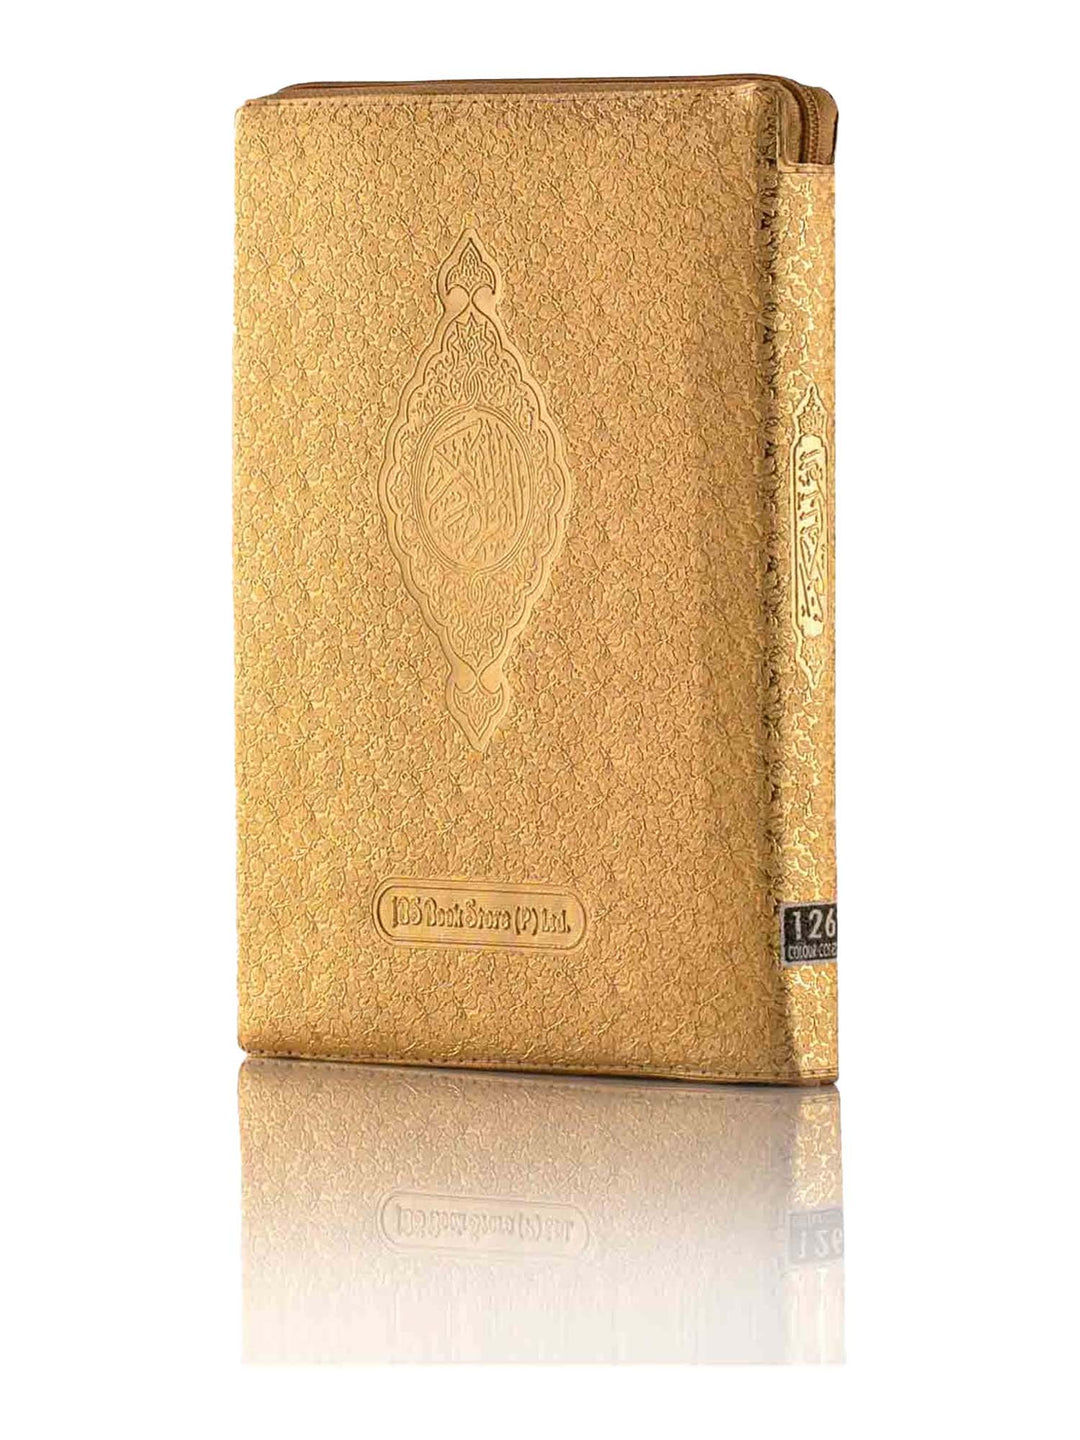 Gold Zip Quran 126 - Indo Pak (Large) - CC